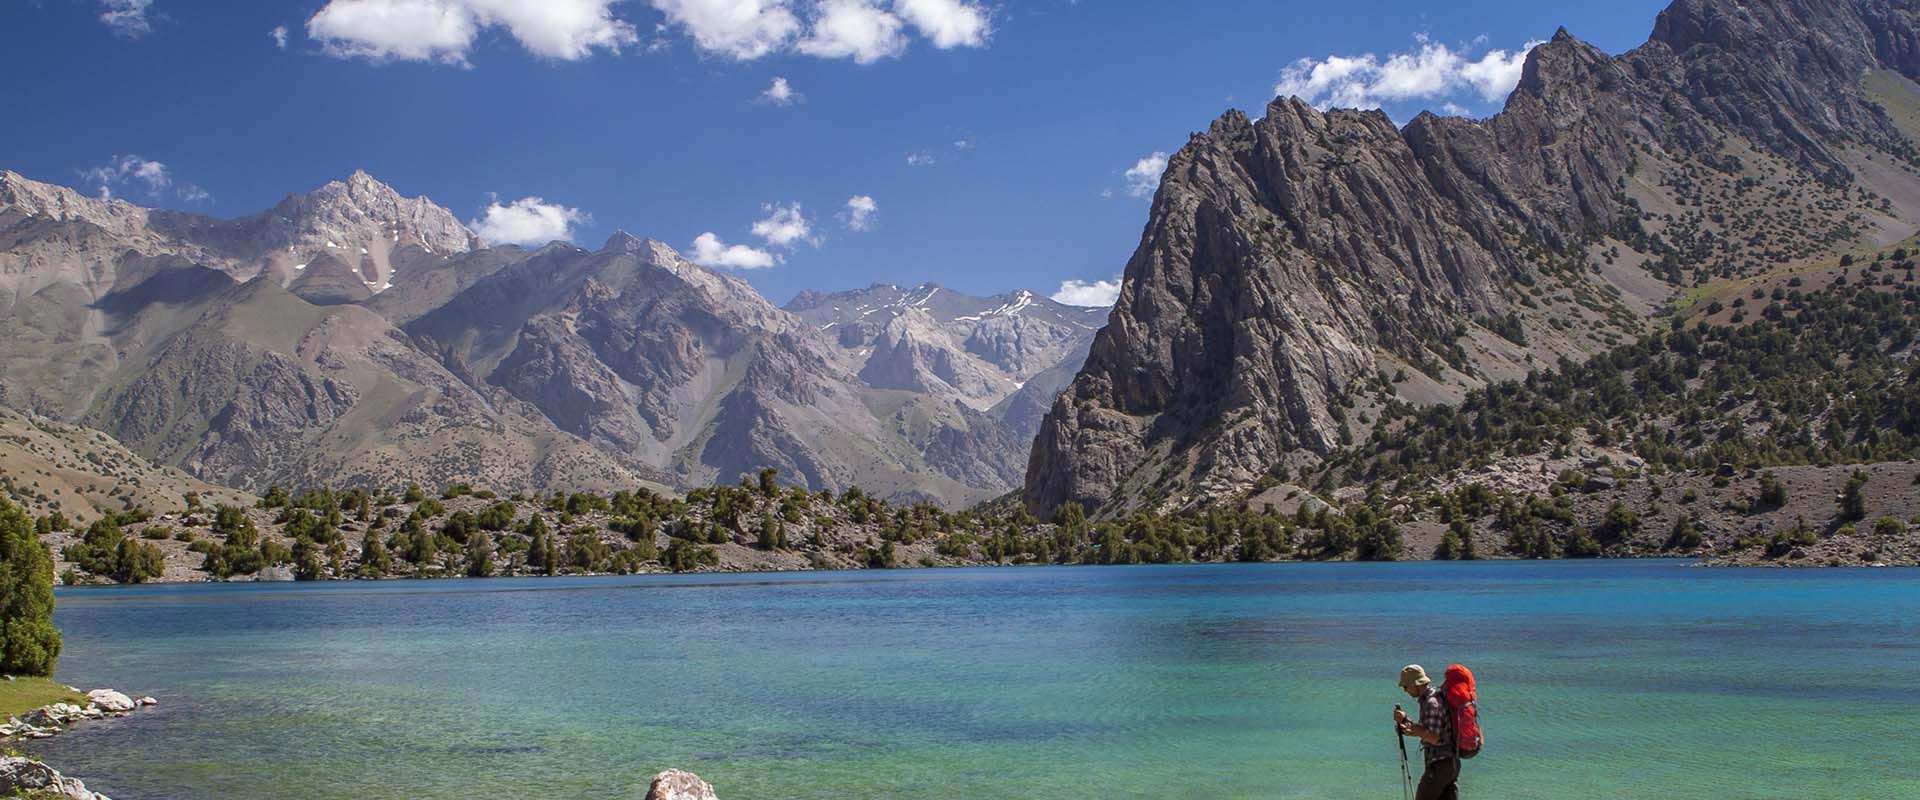 Таджикистан туризм. Туристы в горах Памира. Экотуризм Таджикистан. Туризм в Таджикистане. Туристическая место Таджикистана Памир.